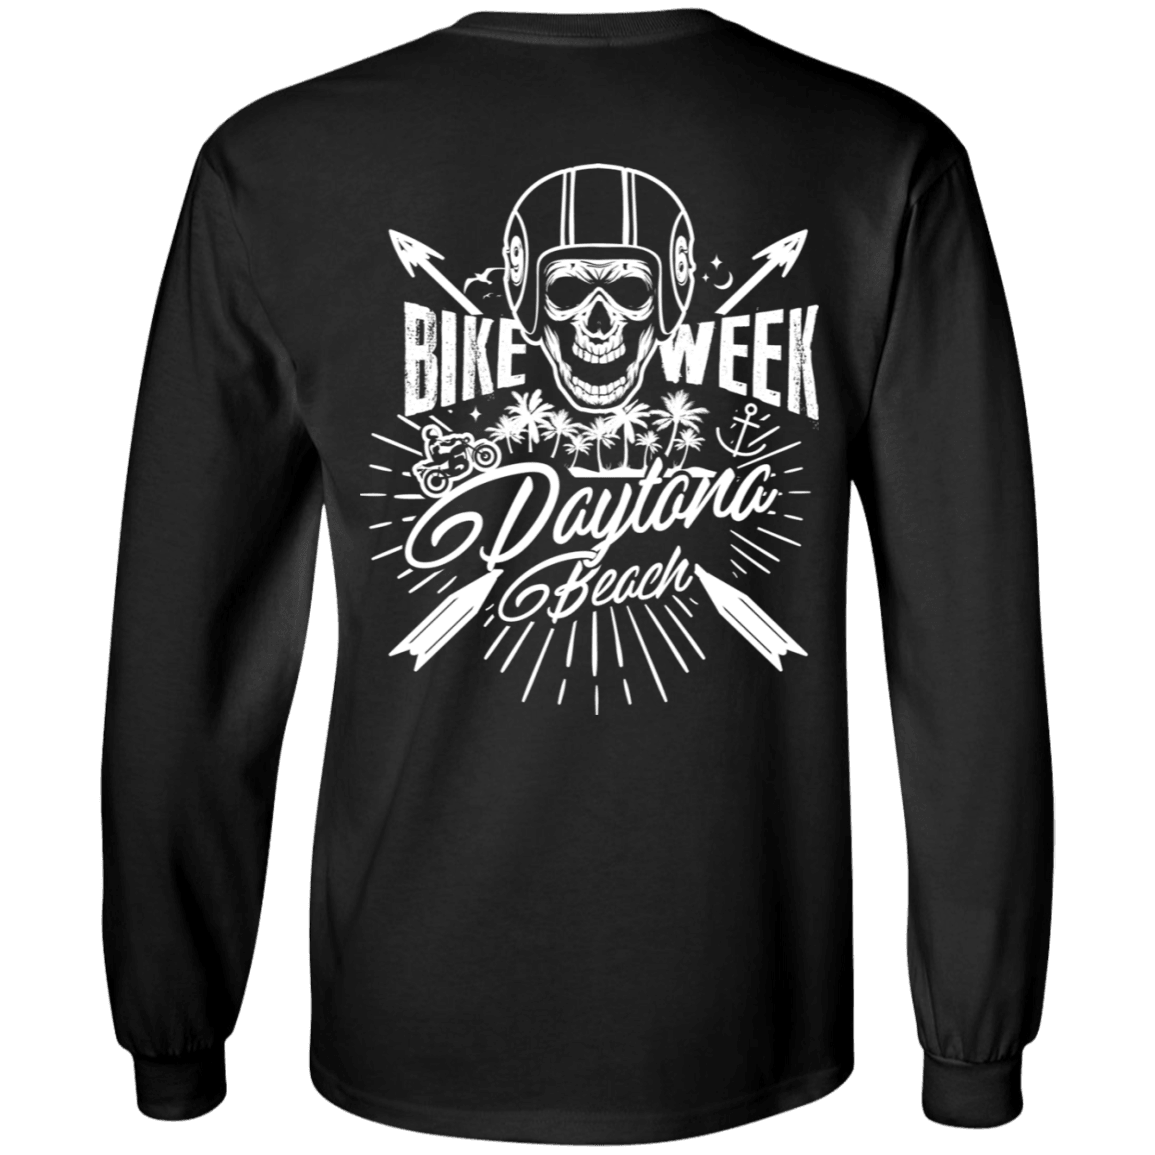 Bike Week: Daytona Long Sleeves - American Legend Rider